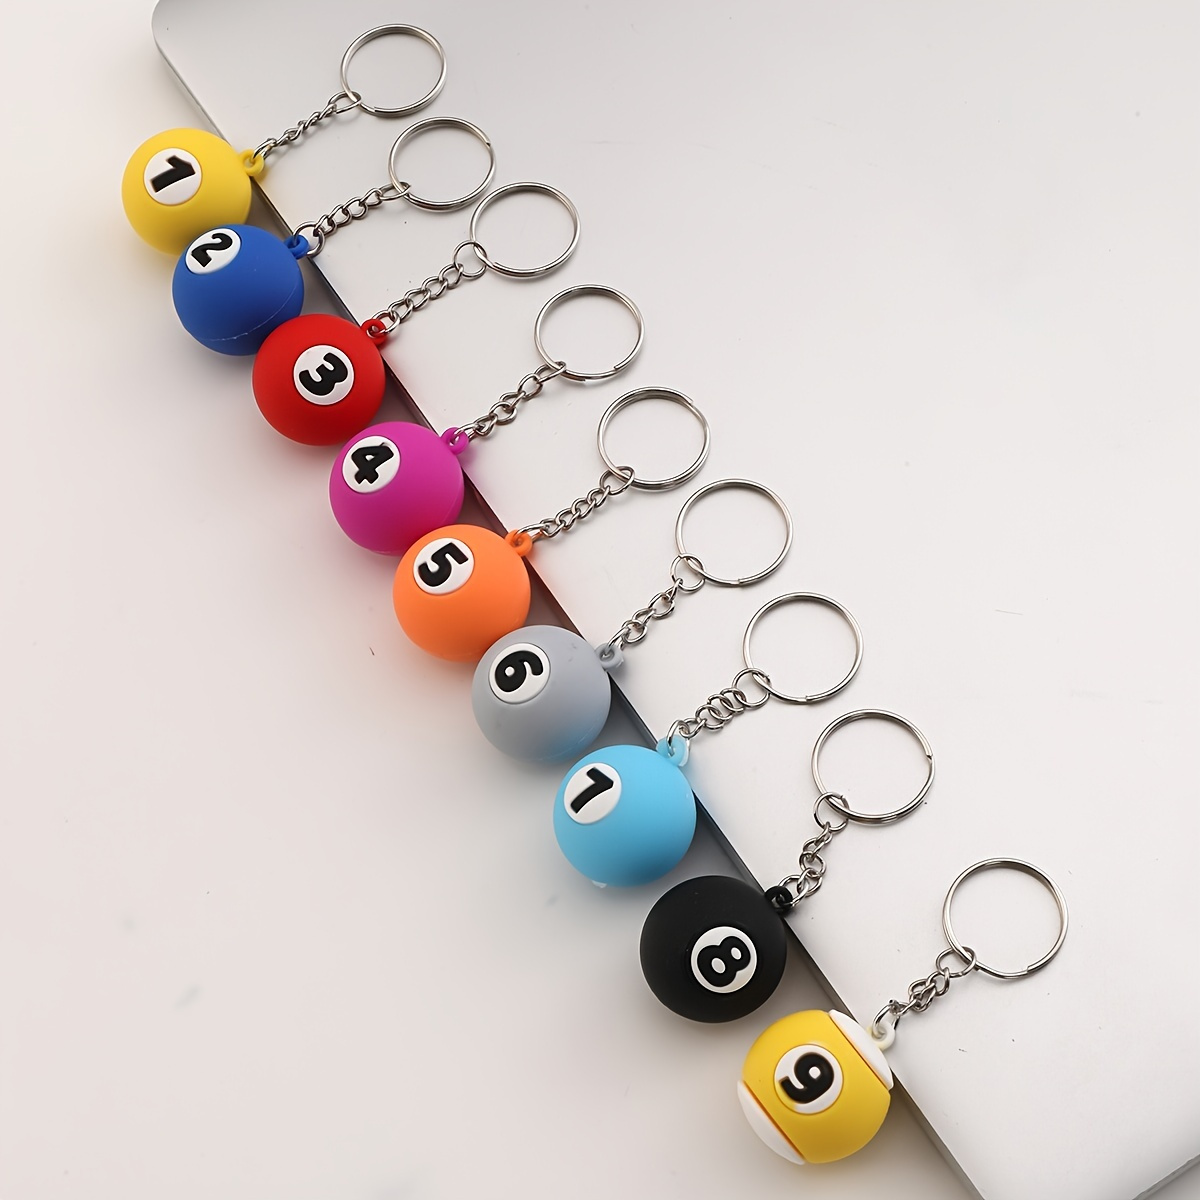 

9pcs Pvc Billiard Keychain Fashion Cute Cartoon Colorful Bag Key Chain Keyring Ornament Bag Purse Charm Accessories